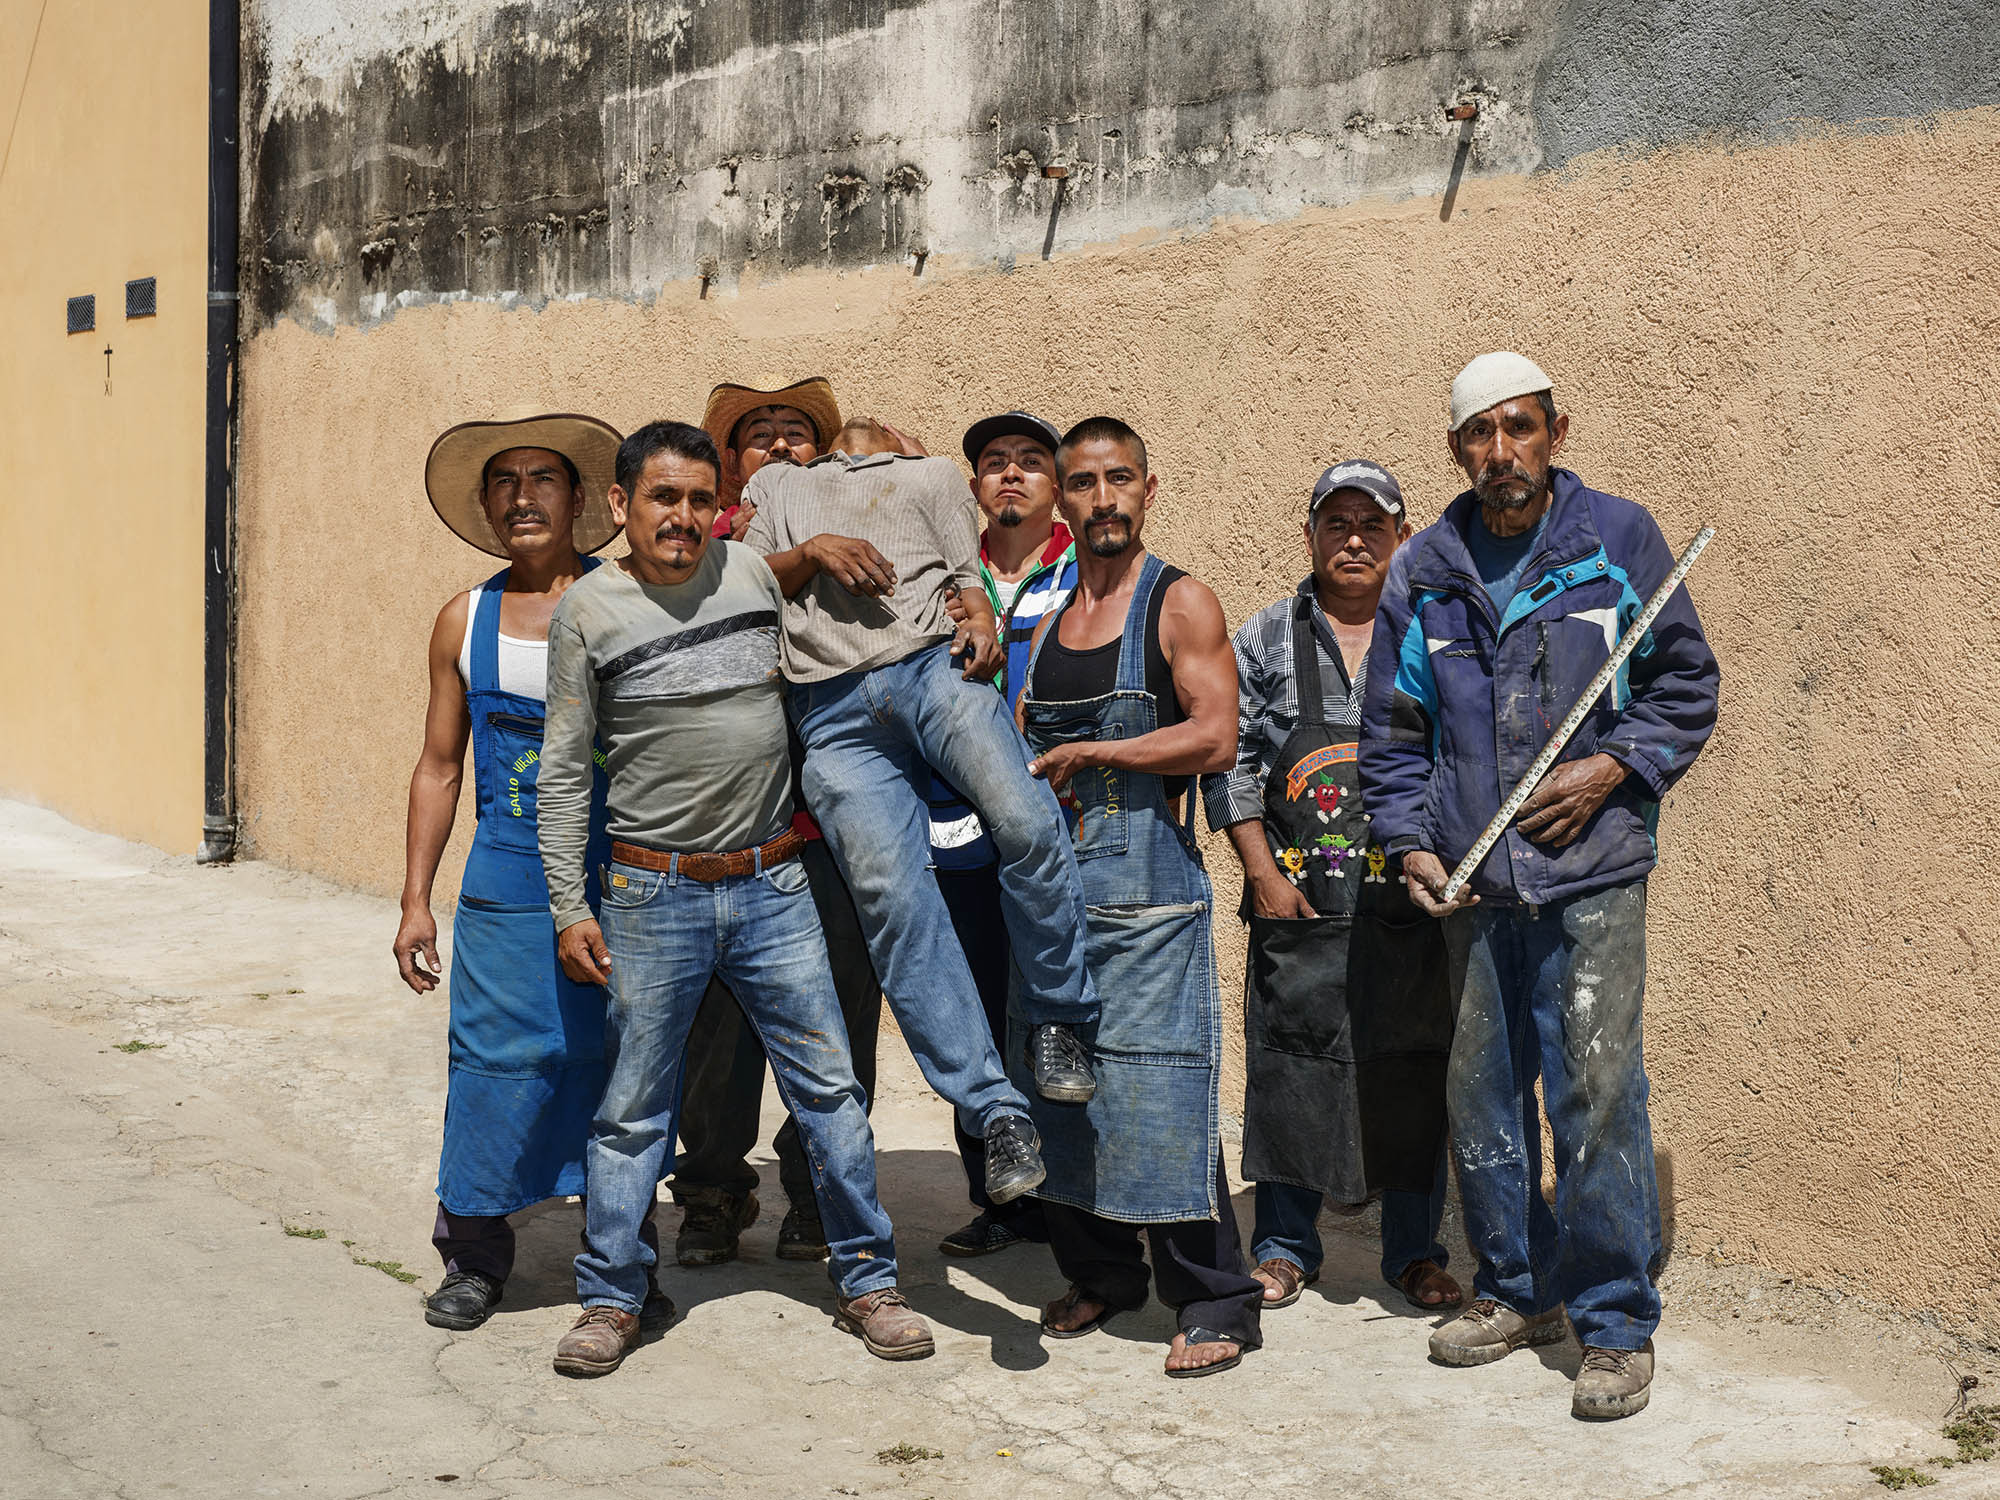 © Peter Hugo. After Siqueiros, Oaxaca de Juárez